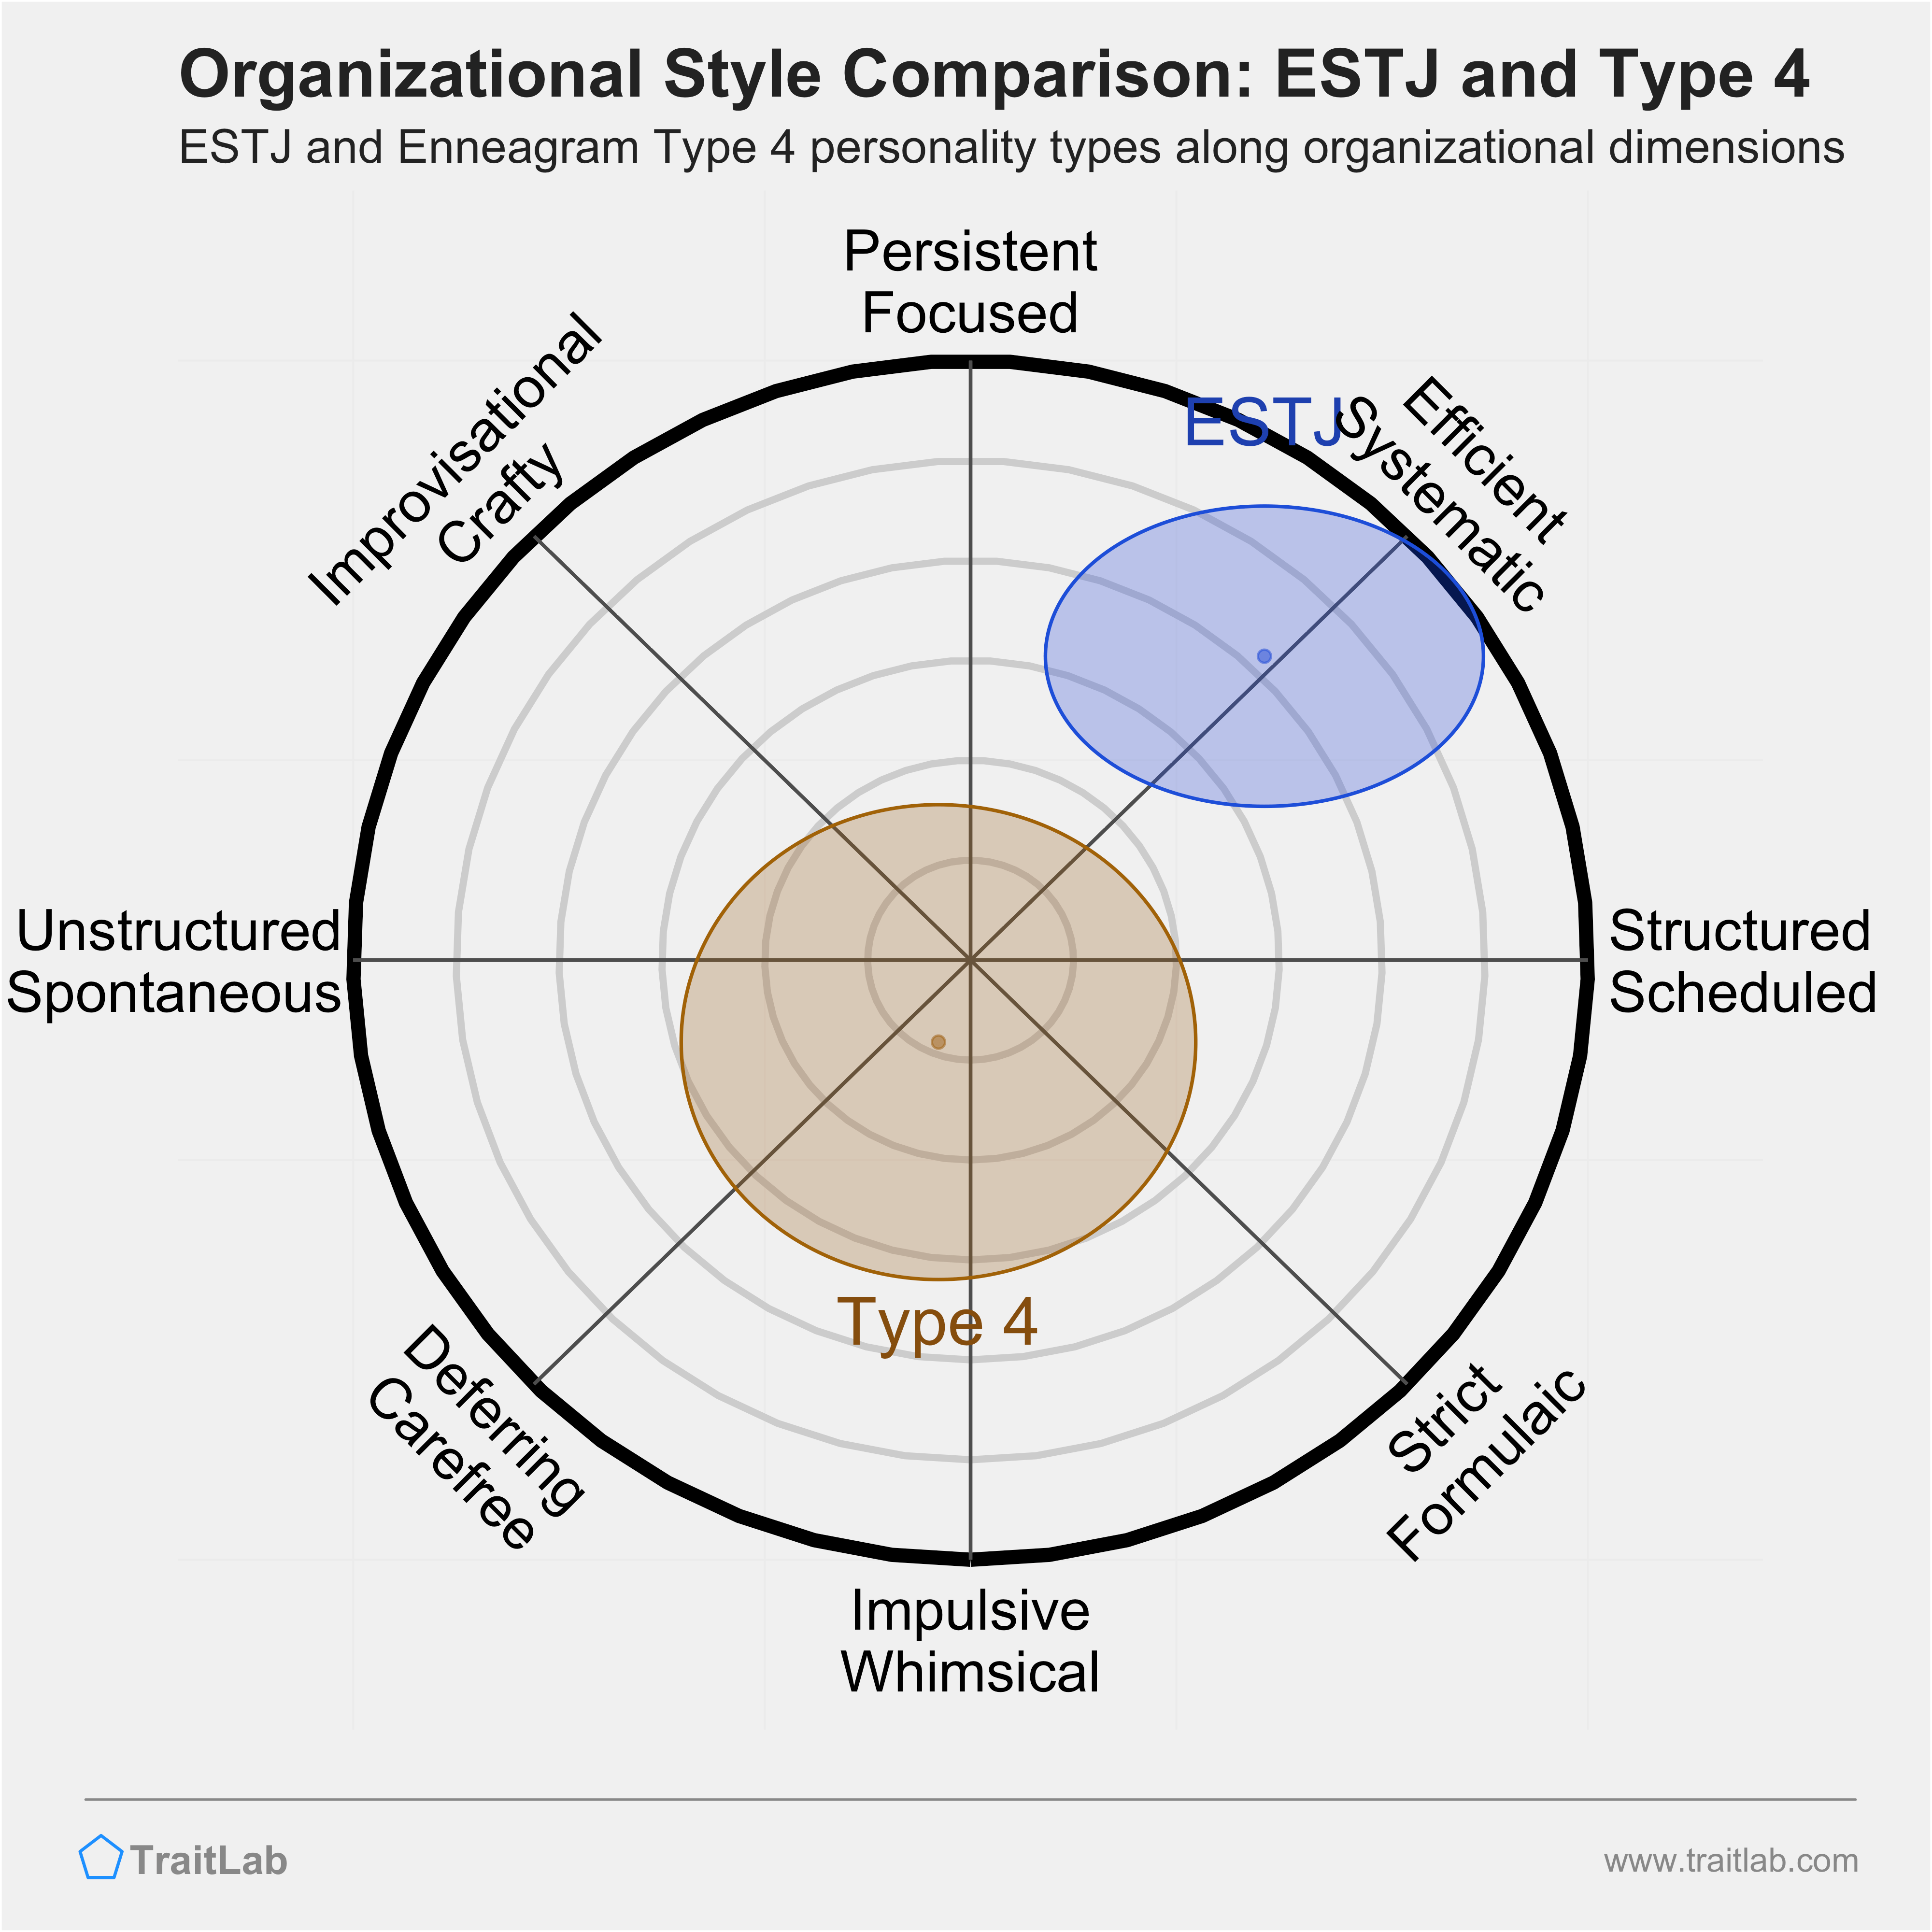 ESTJ and Type 4 comparison across organizational dimensions